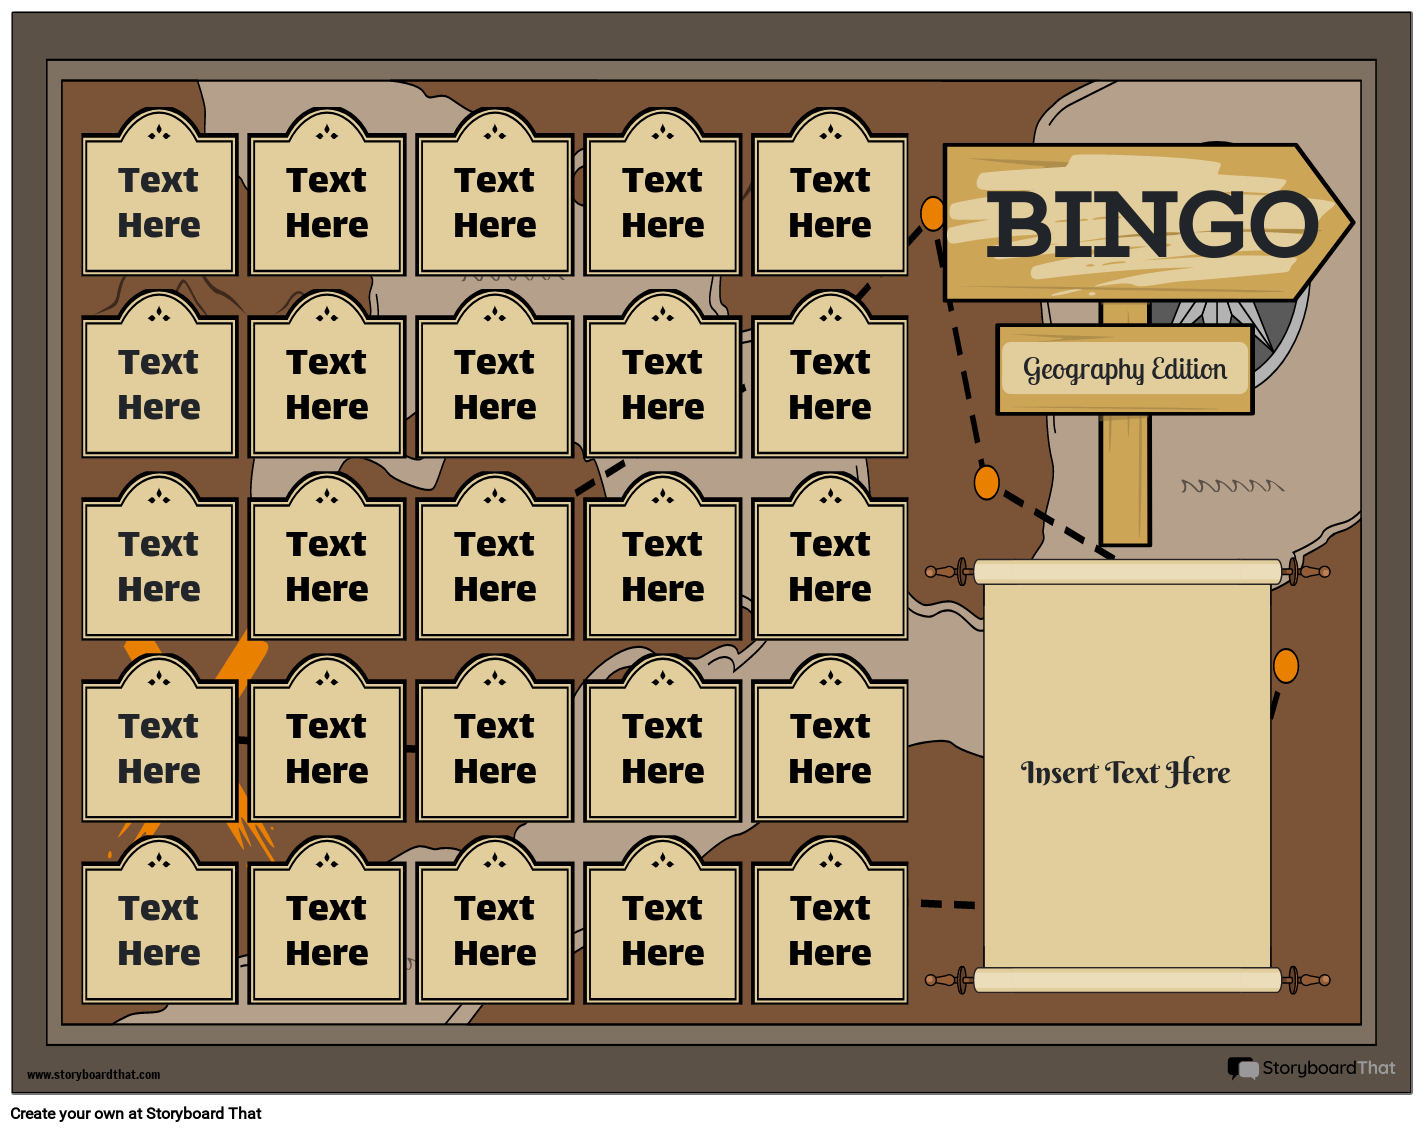 Bingo Game Geography Edition